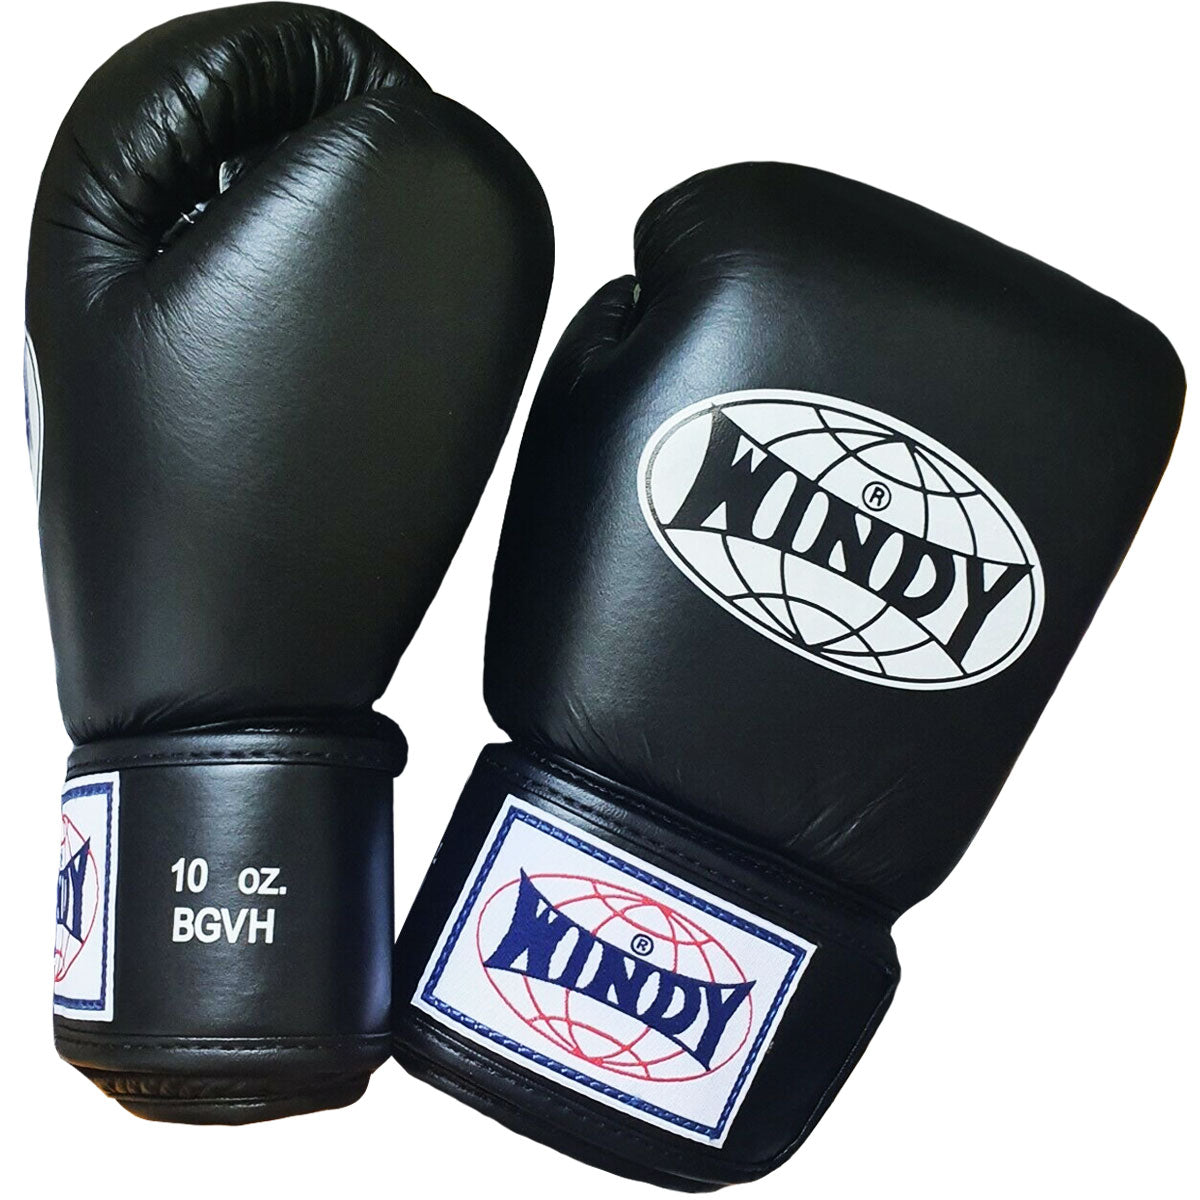 Boxing Gloves Windy BGVH Black